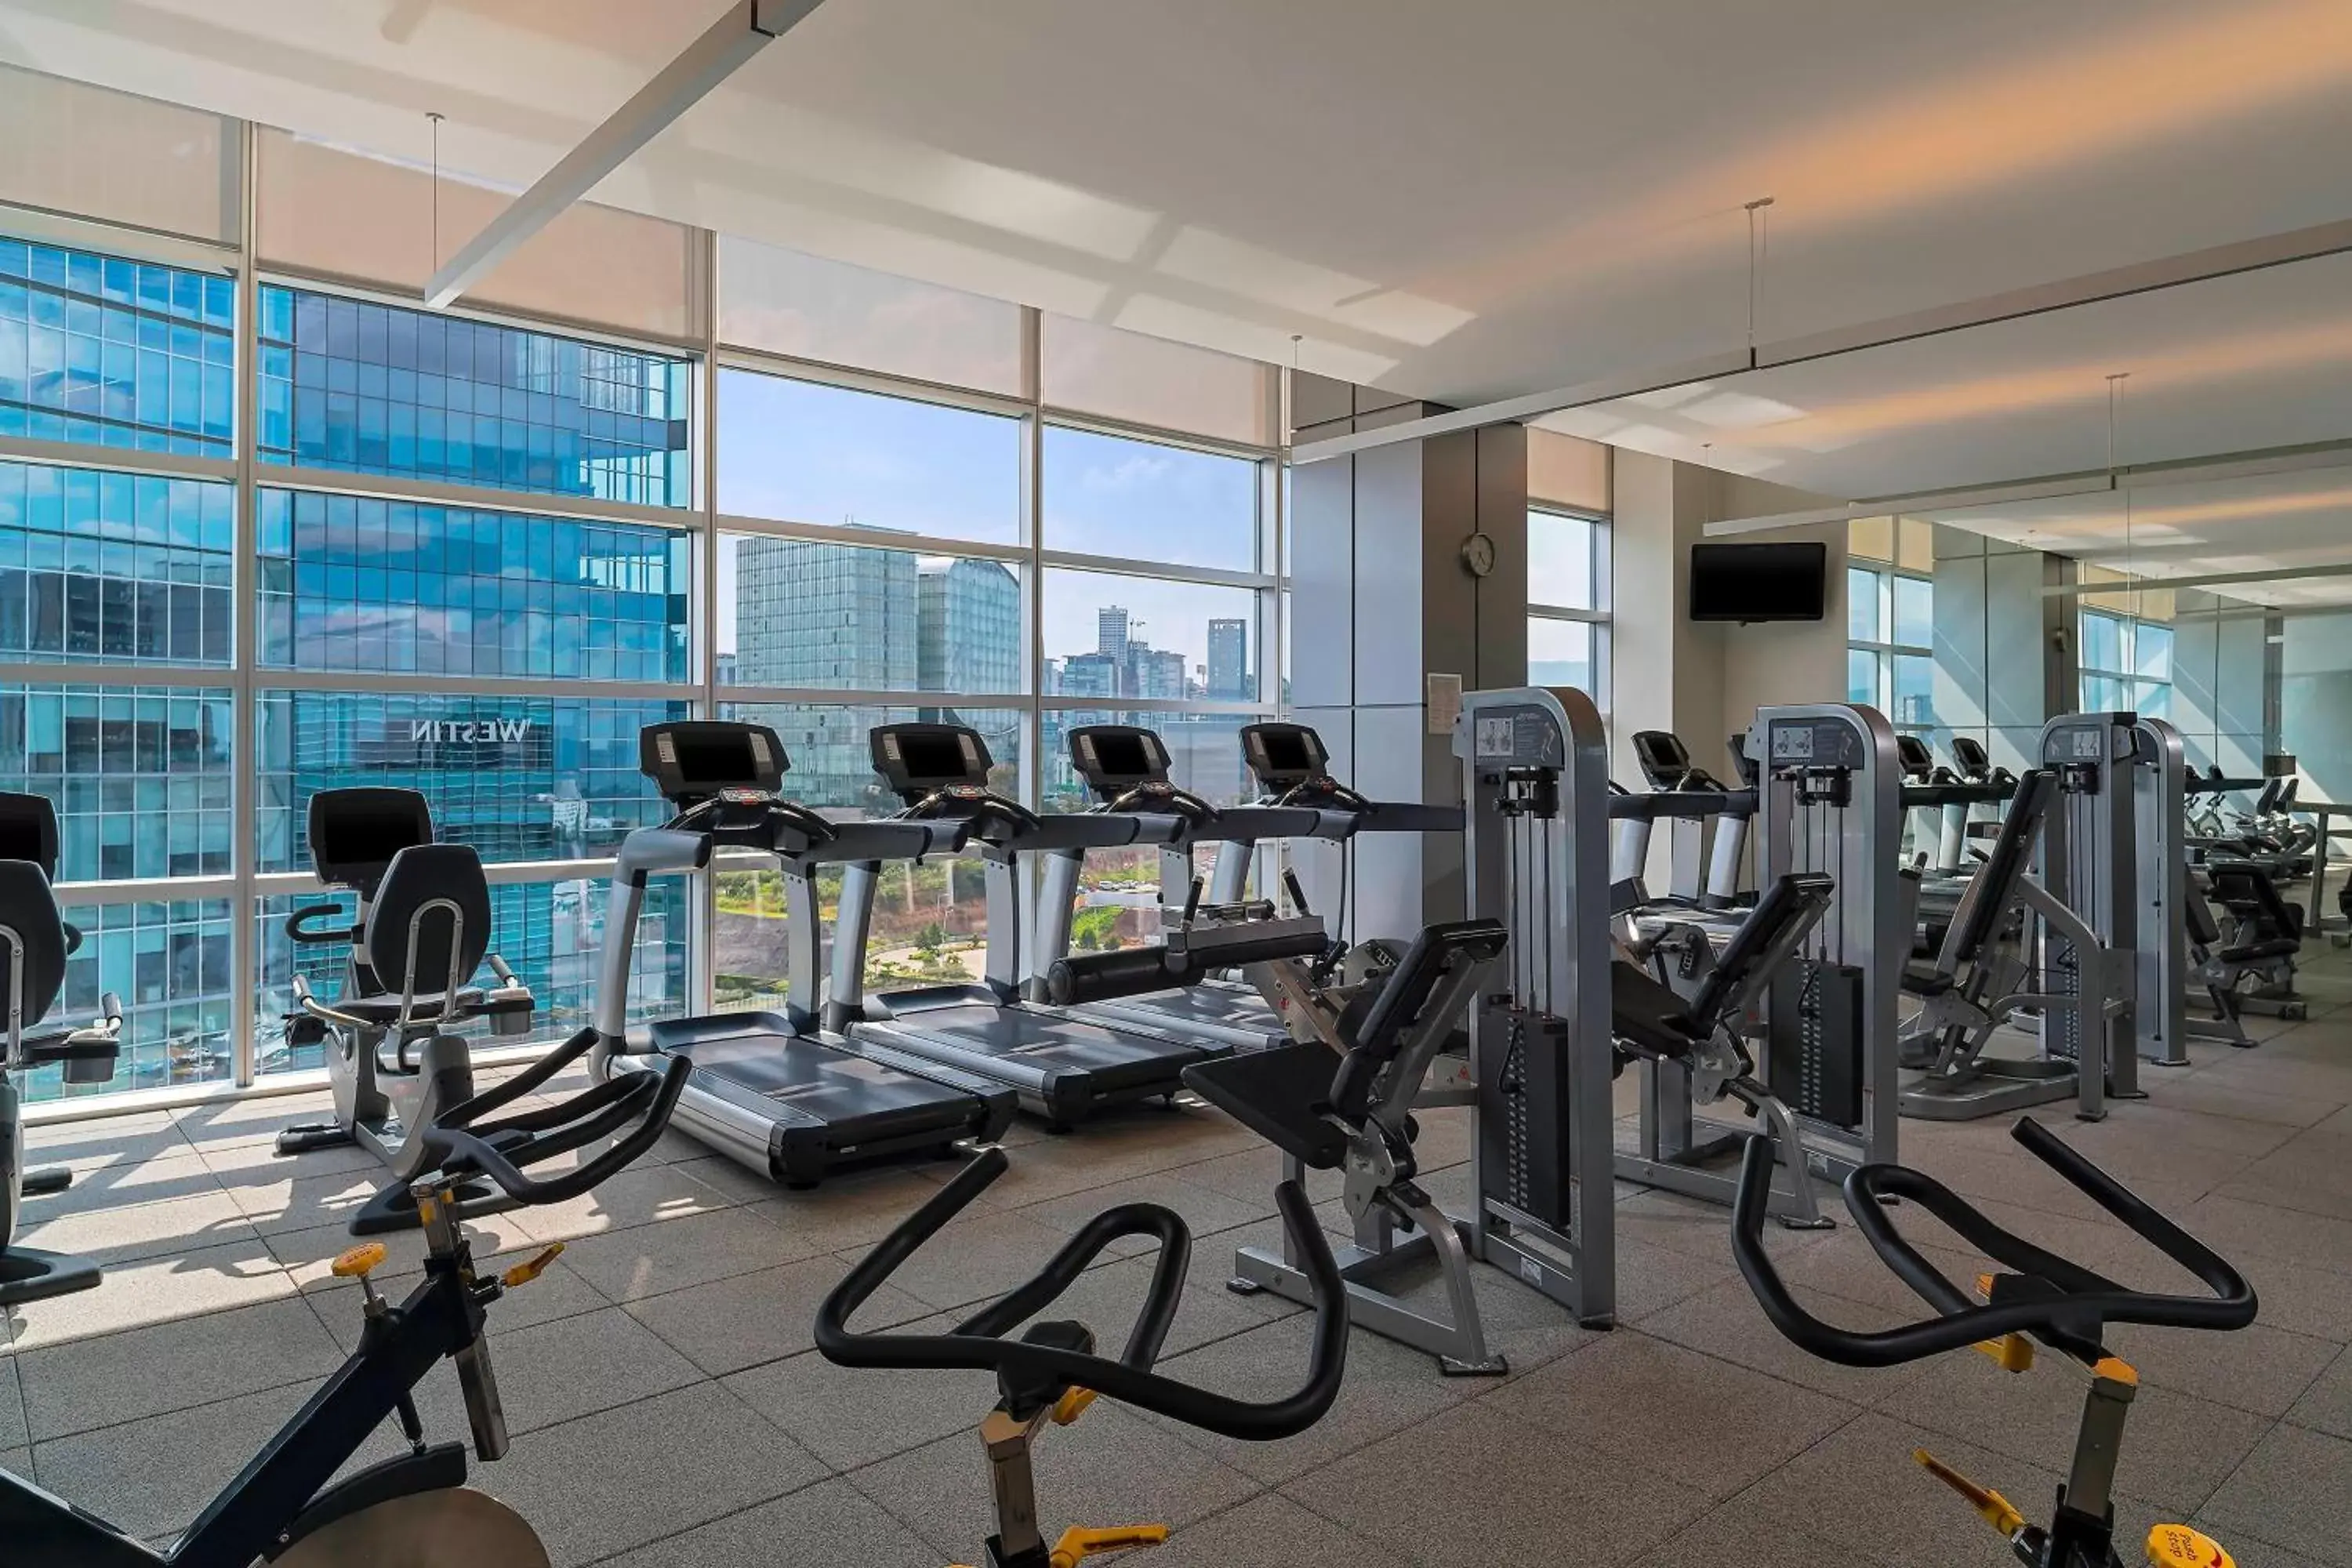 Fitness centre/facilities, Fitness Center/Facilities in The Westin Santa Fe, Mexico City